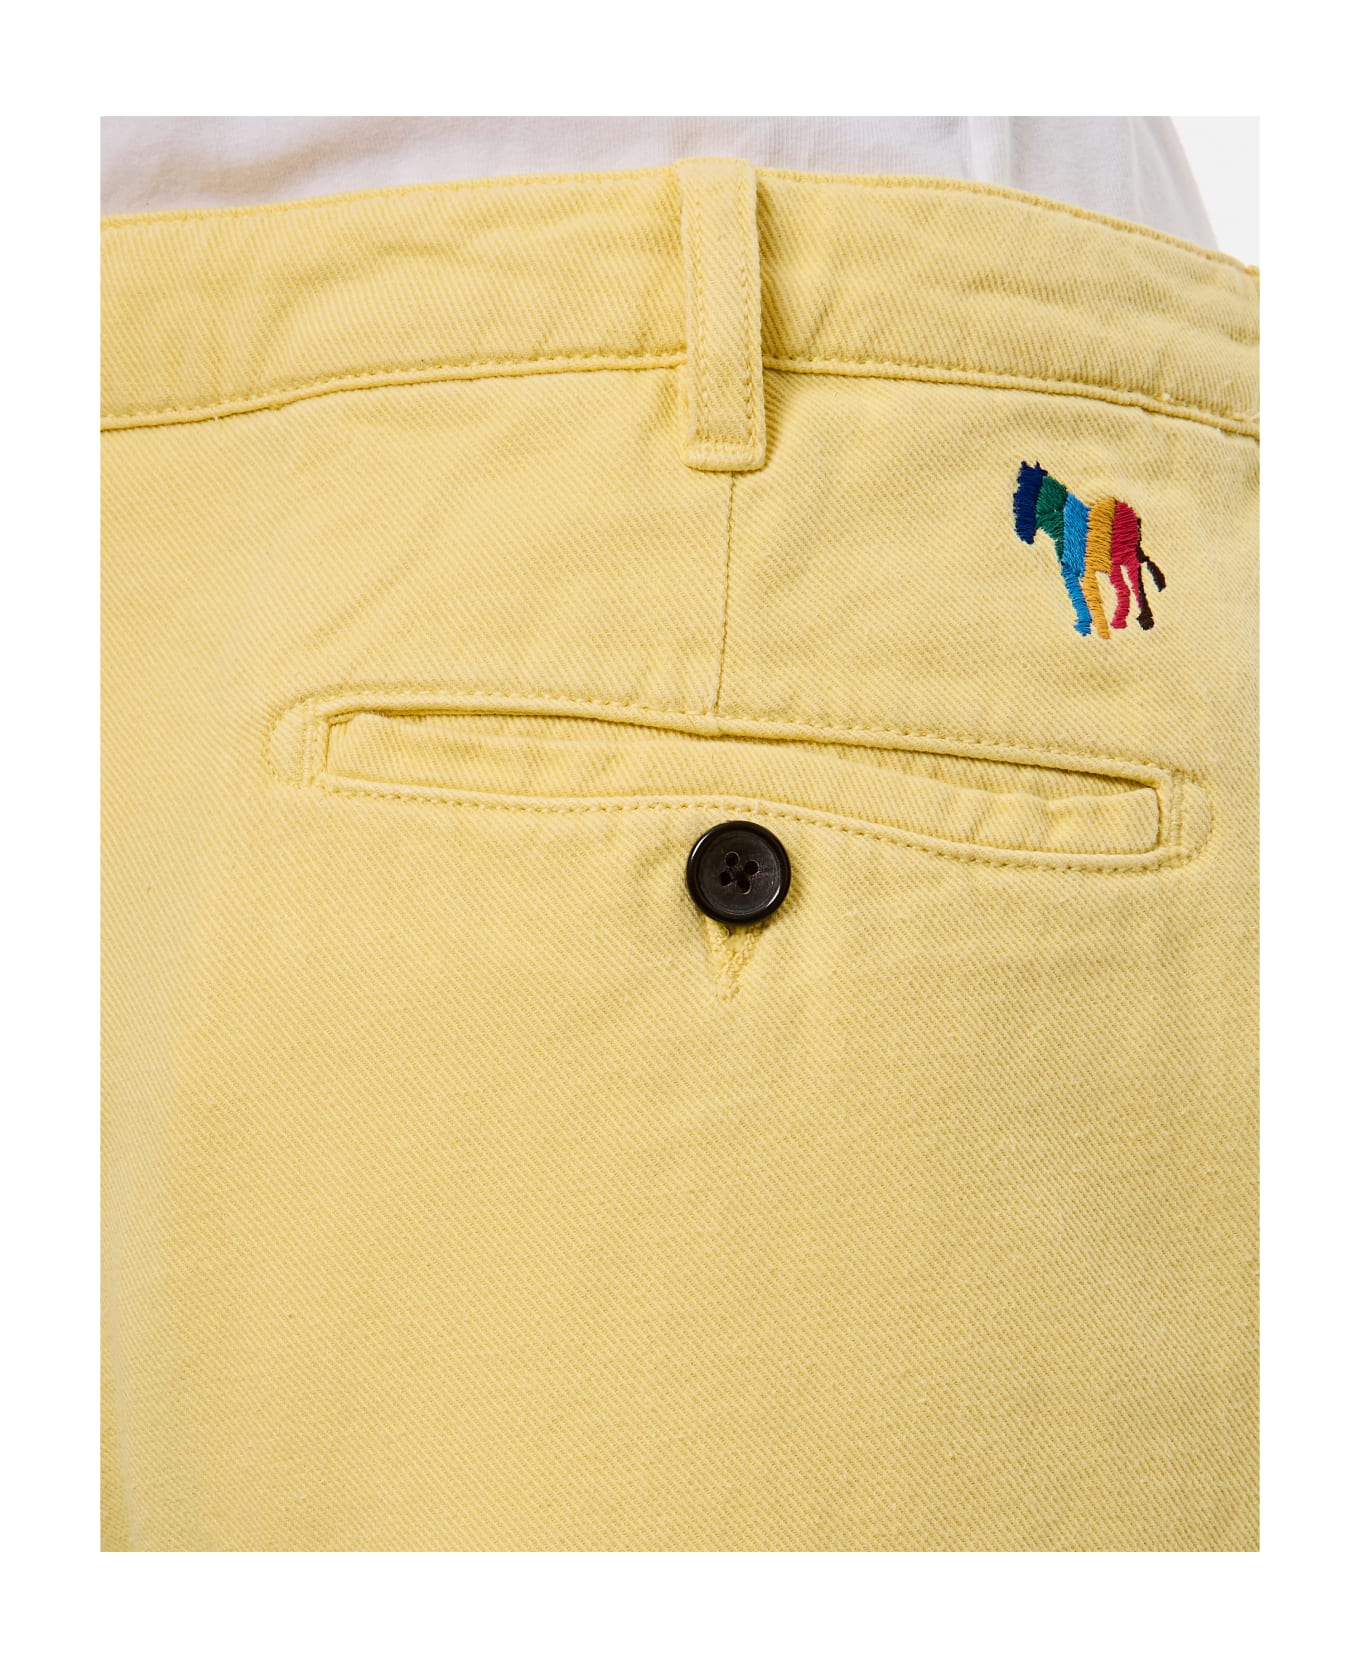 Paul Smith Cotton Shorts - Yellow